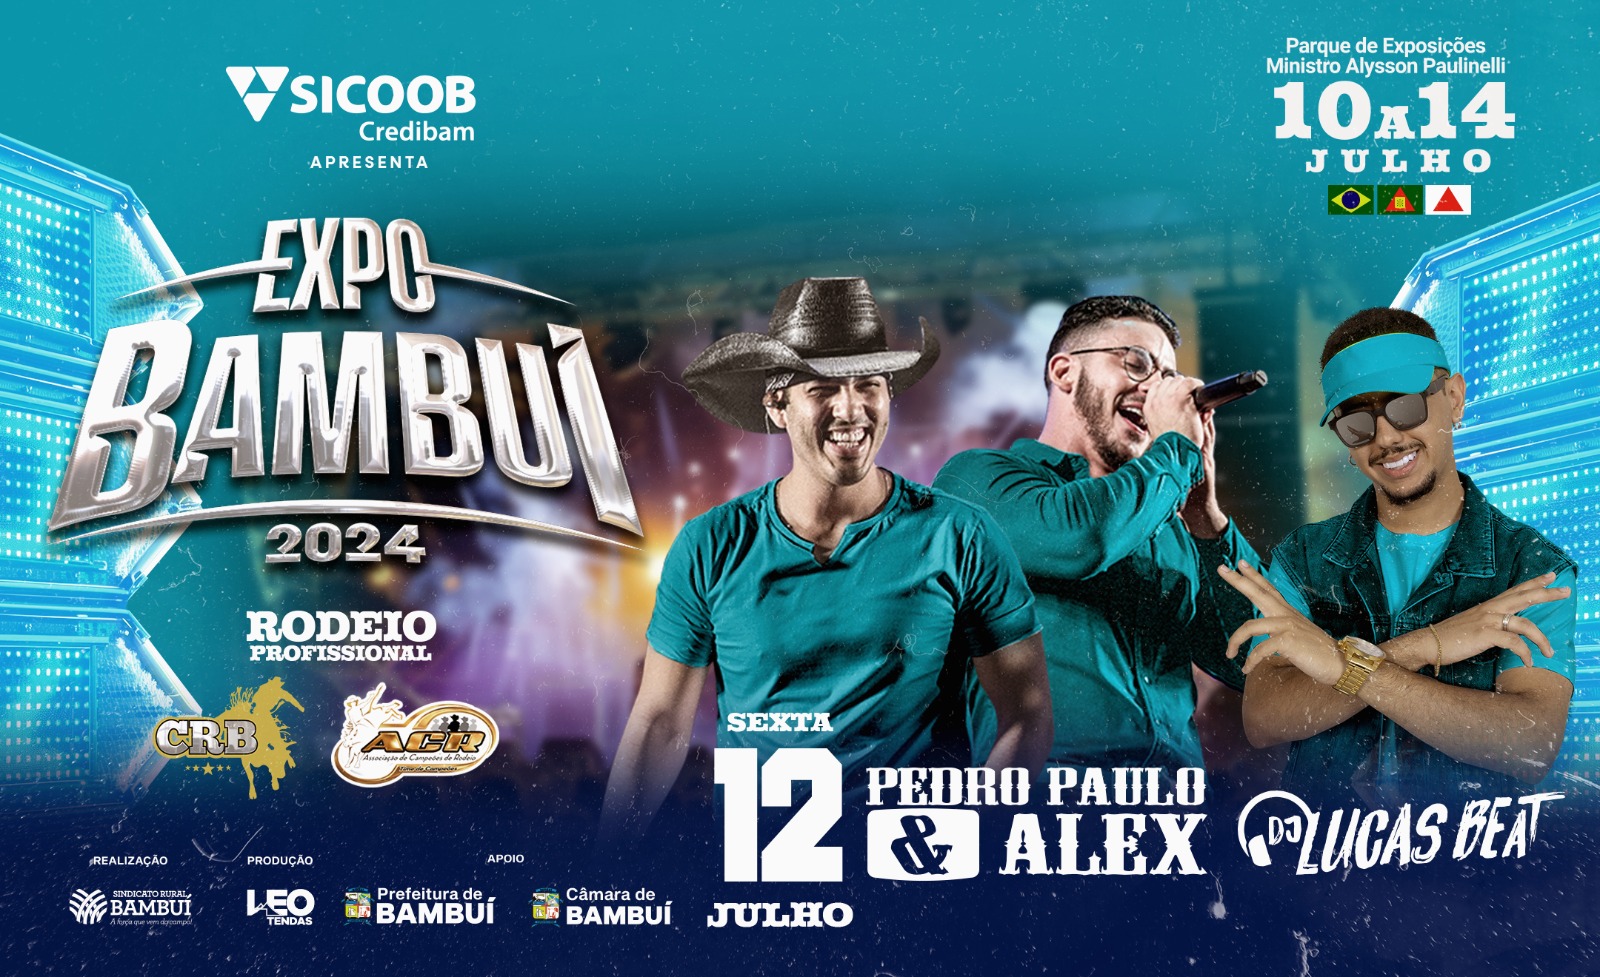 52º Expobambuí 2024 - Pedro Paulo e Alex + Dj Lucas Beat